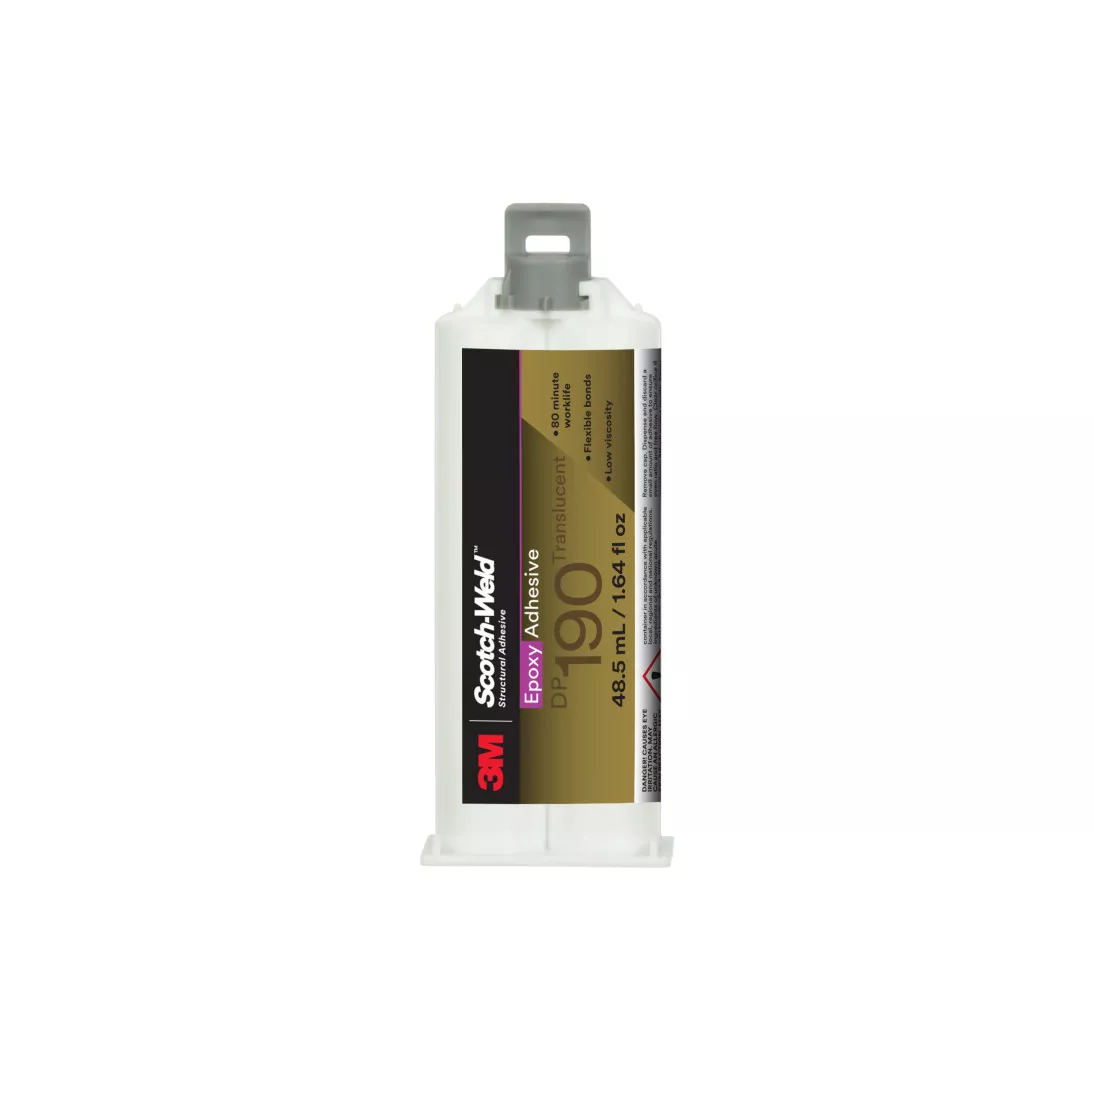 3M™ Scotch-Weld™ Epoxy Adhesive DP190, Translucent, 48.5mL Duo-Pak,
12/case